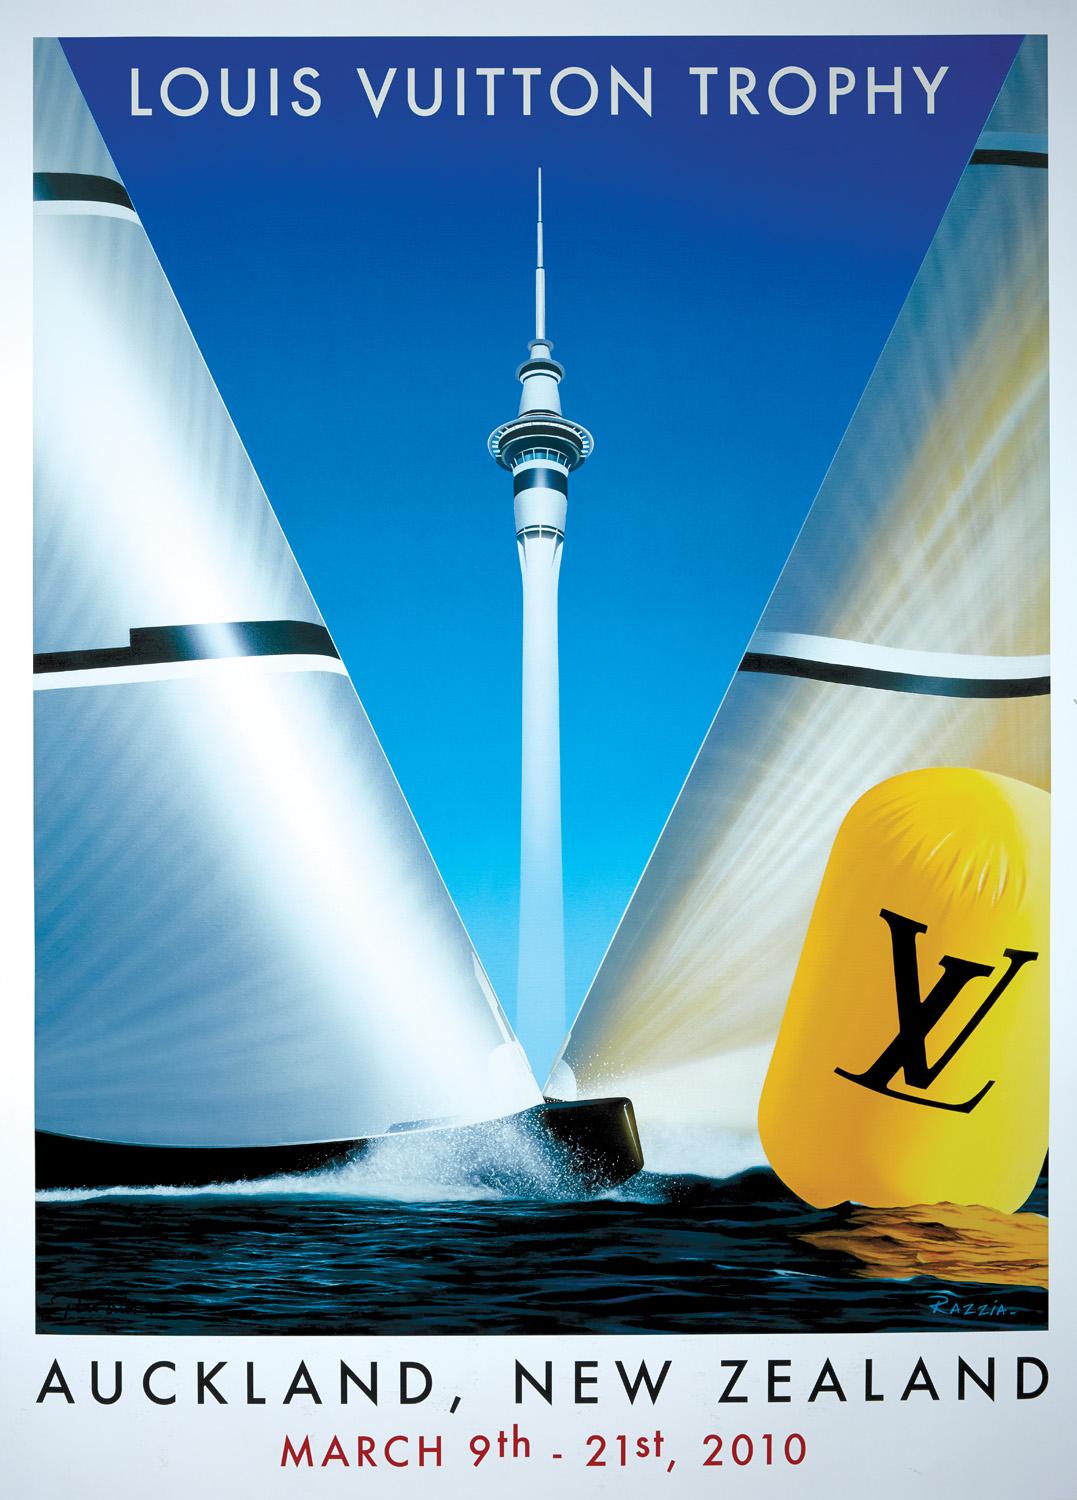 Louis Vuitton Cup - Auckland, New Zealand, Original Vintage Poster